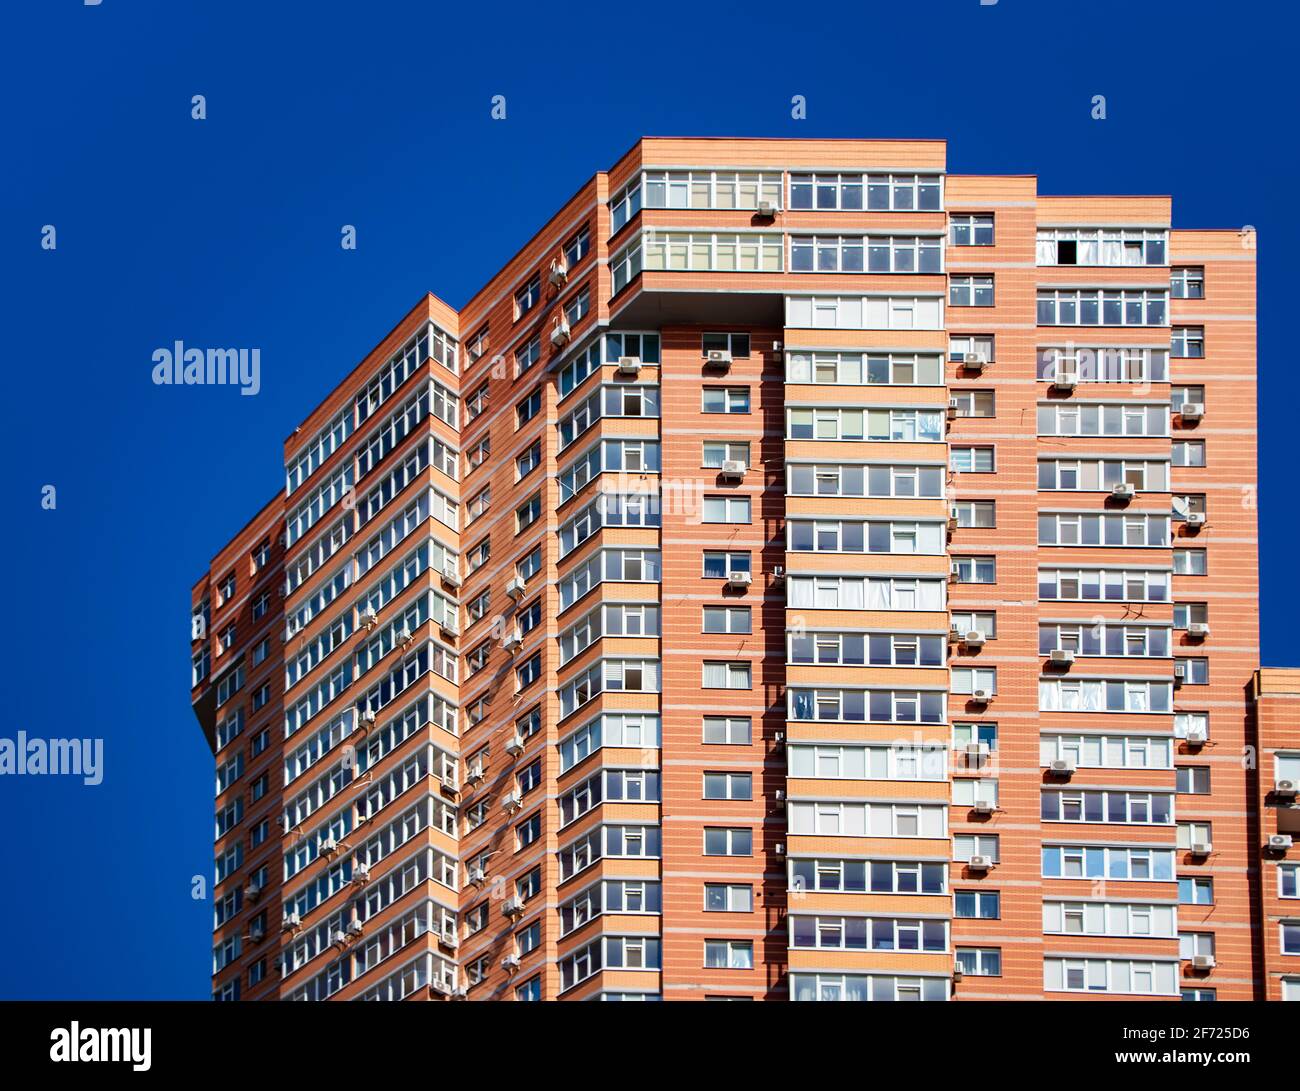 Brick building with windows on sky background. Stock Photo